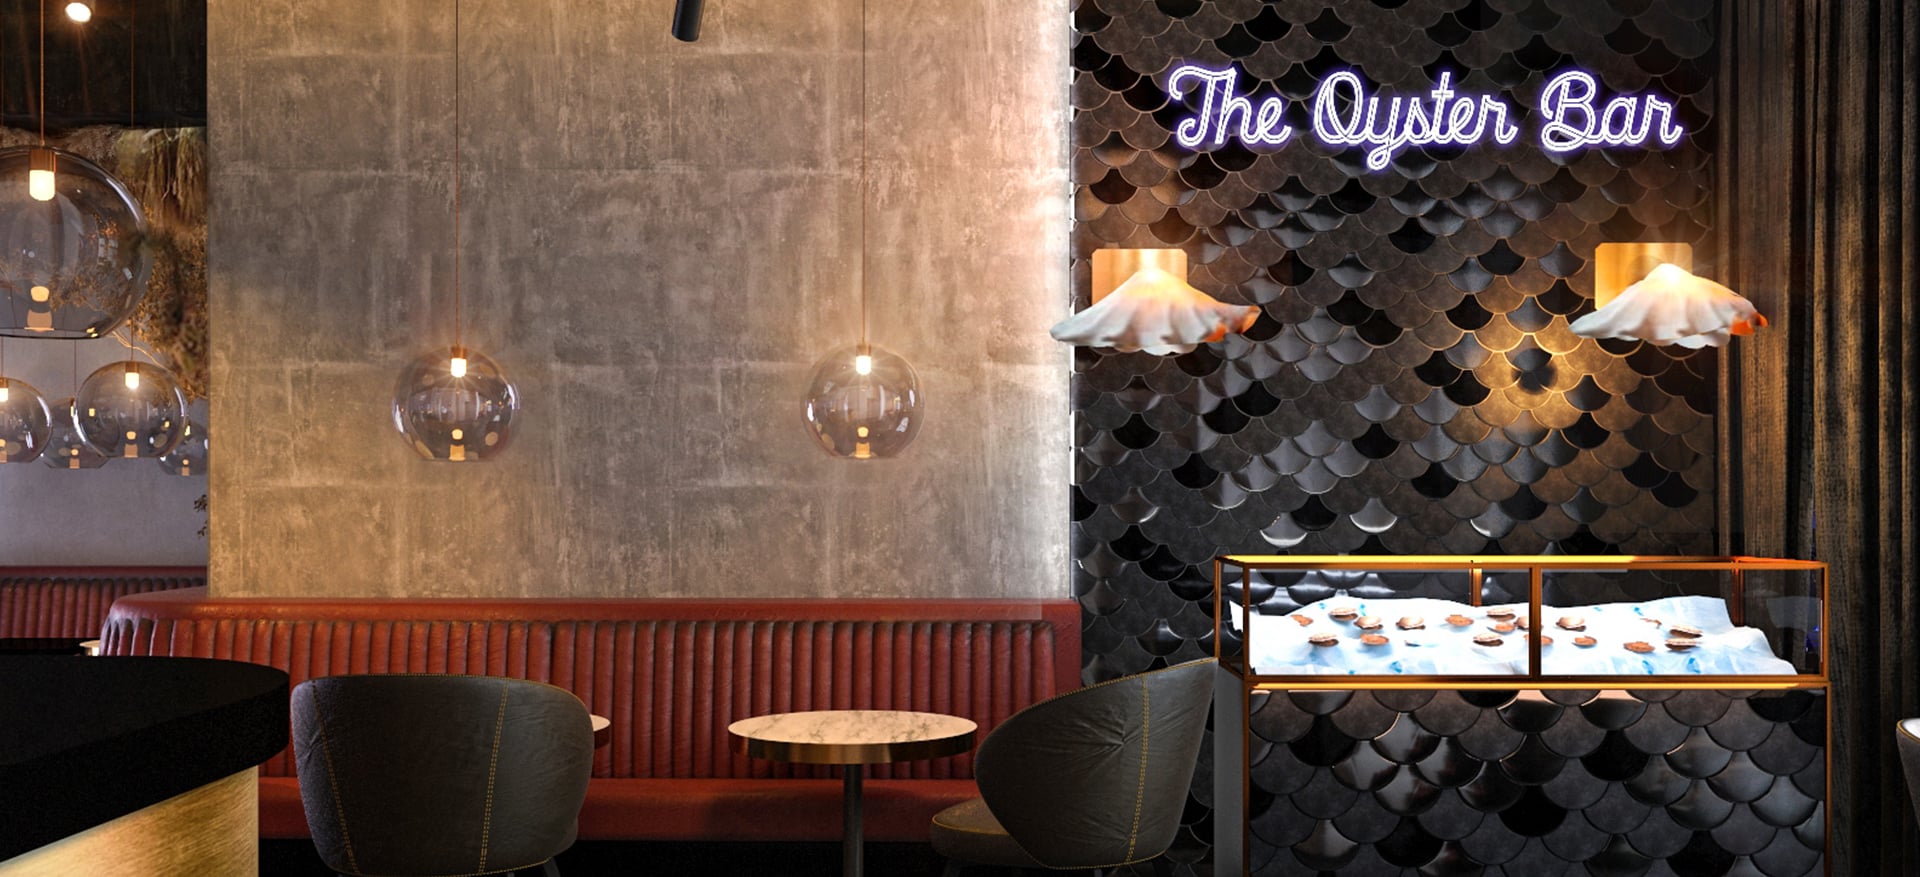 The Oyster Bar: Restaurant Interior Visual